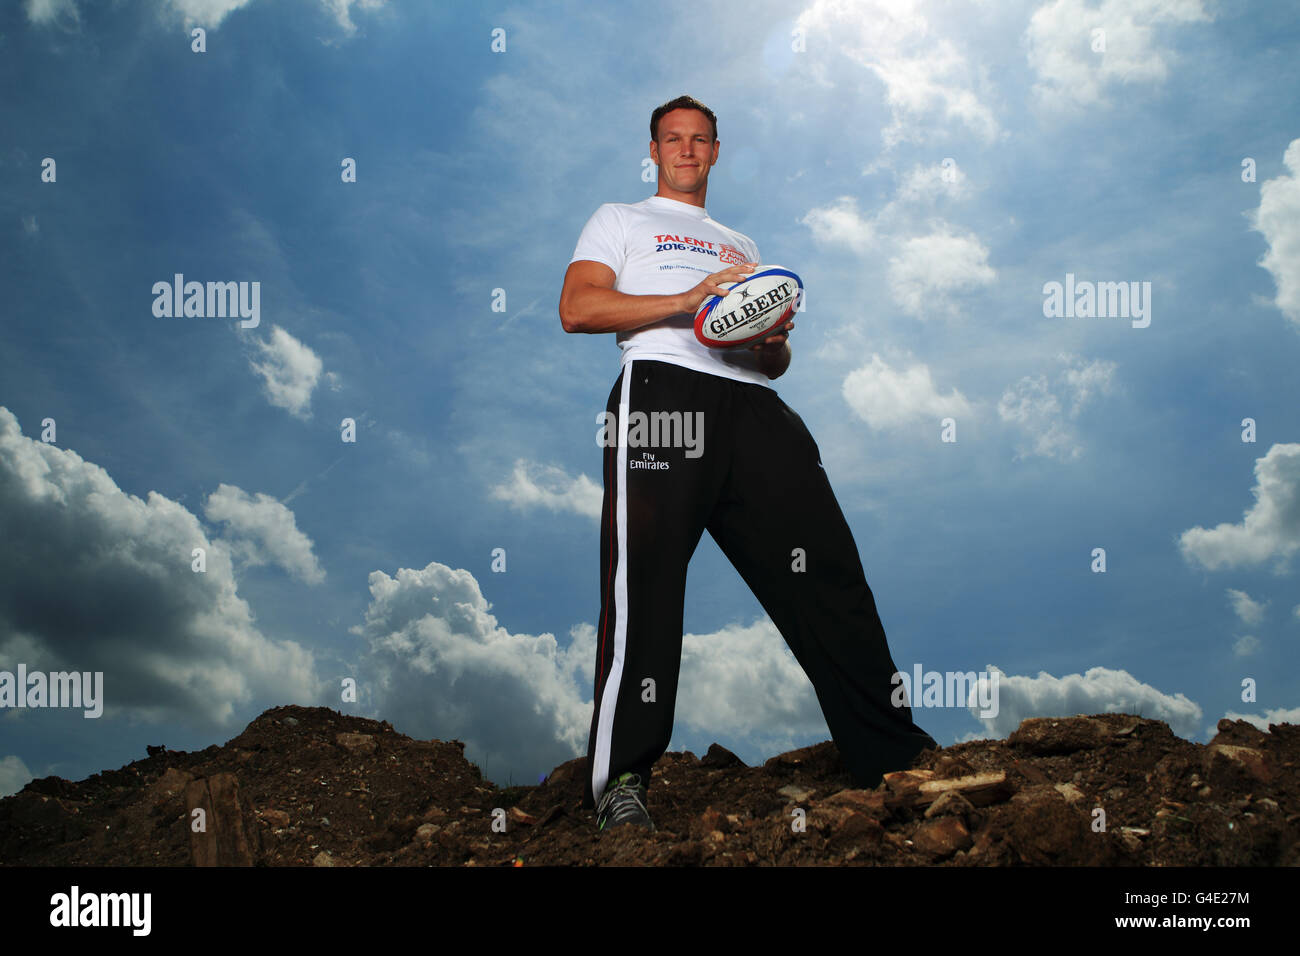 Inghilterra Rugby Sevens giocatore Tom Powell durante la fotocellula al Lee Valley Athletics Center a Londra, per promuovere Power2Podium, UK Sports ultimo programma ID talento. Foto Stock